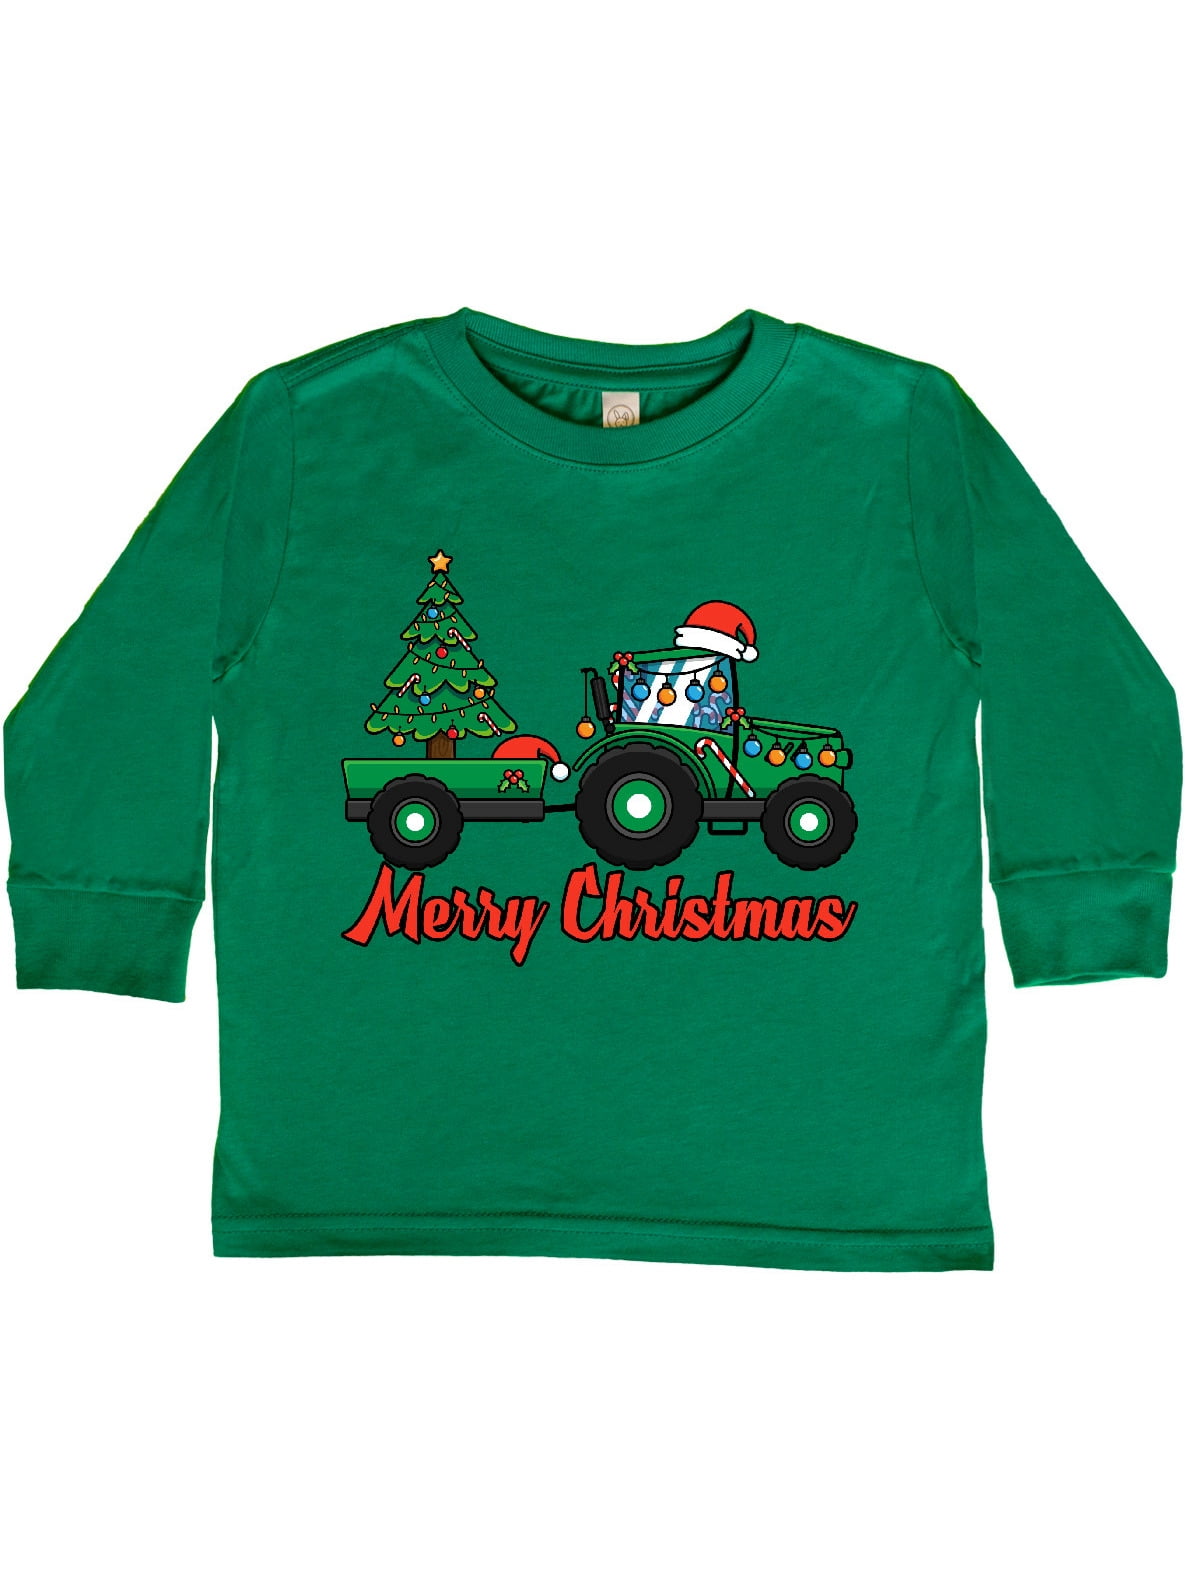 Personalised Tractor Boys Girls T Shirt Top christmas xmas gift Birthday 